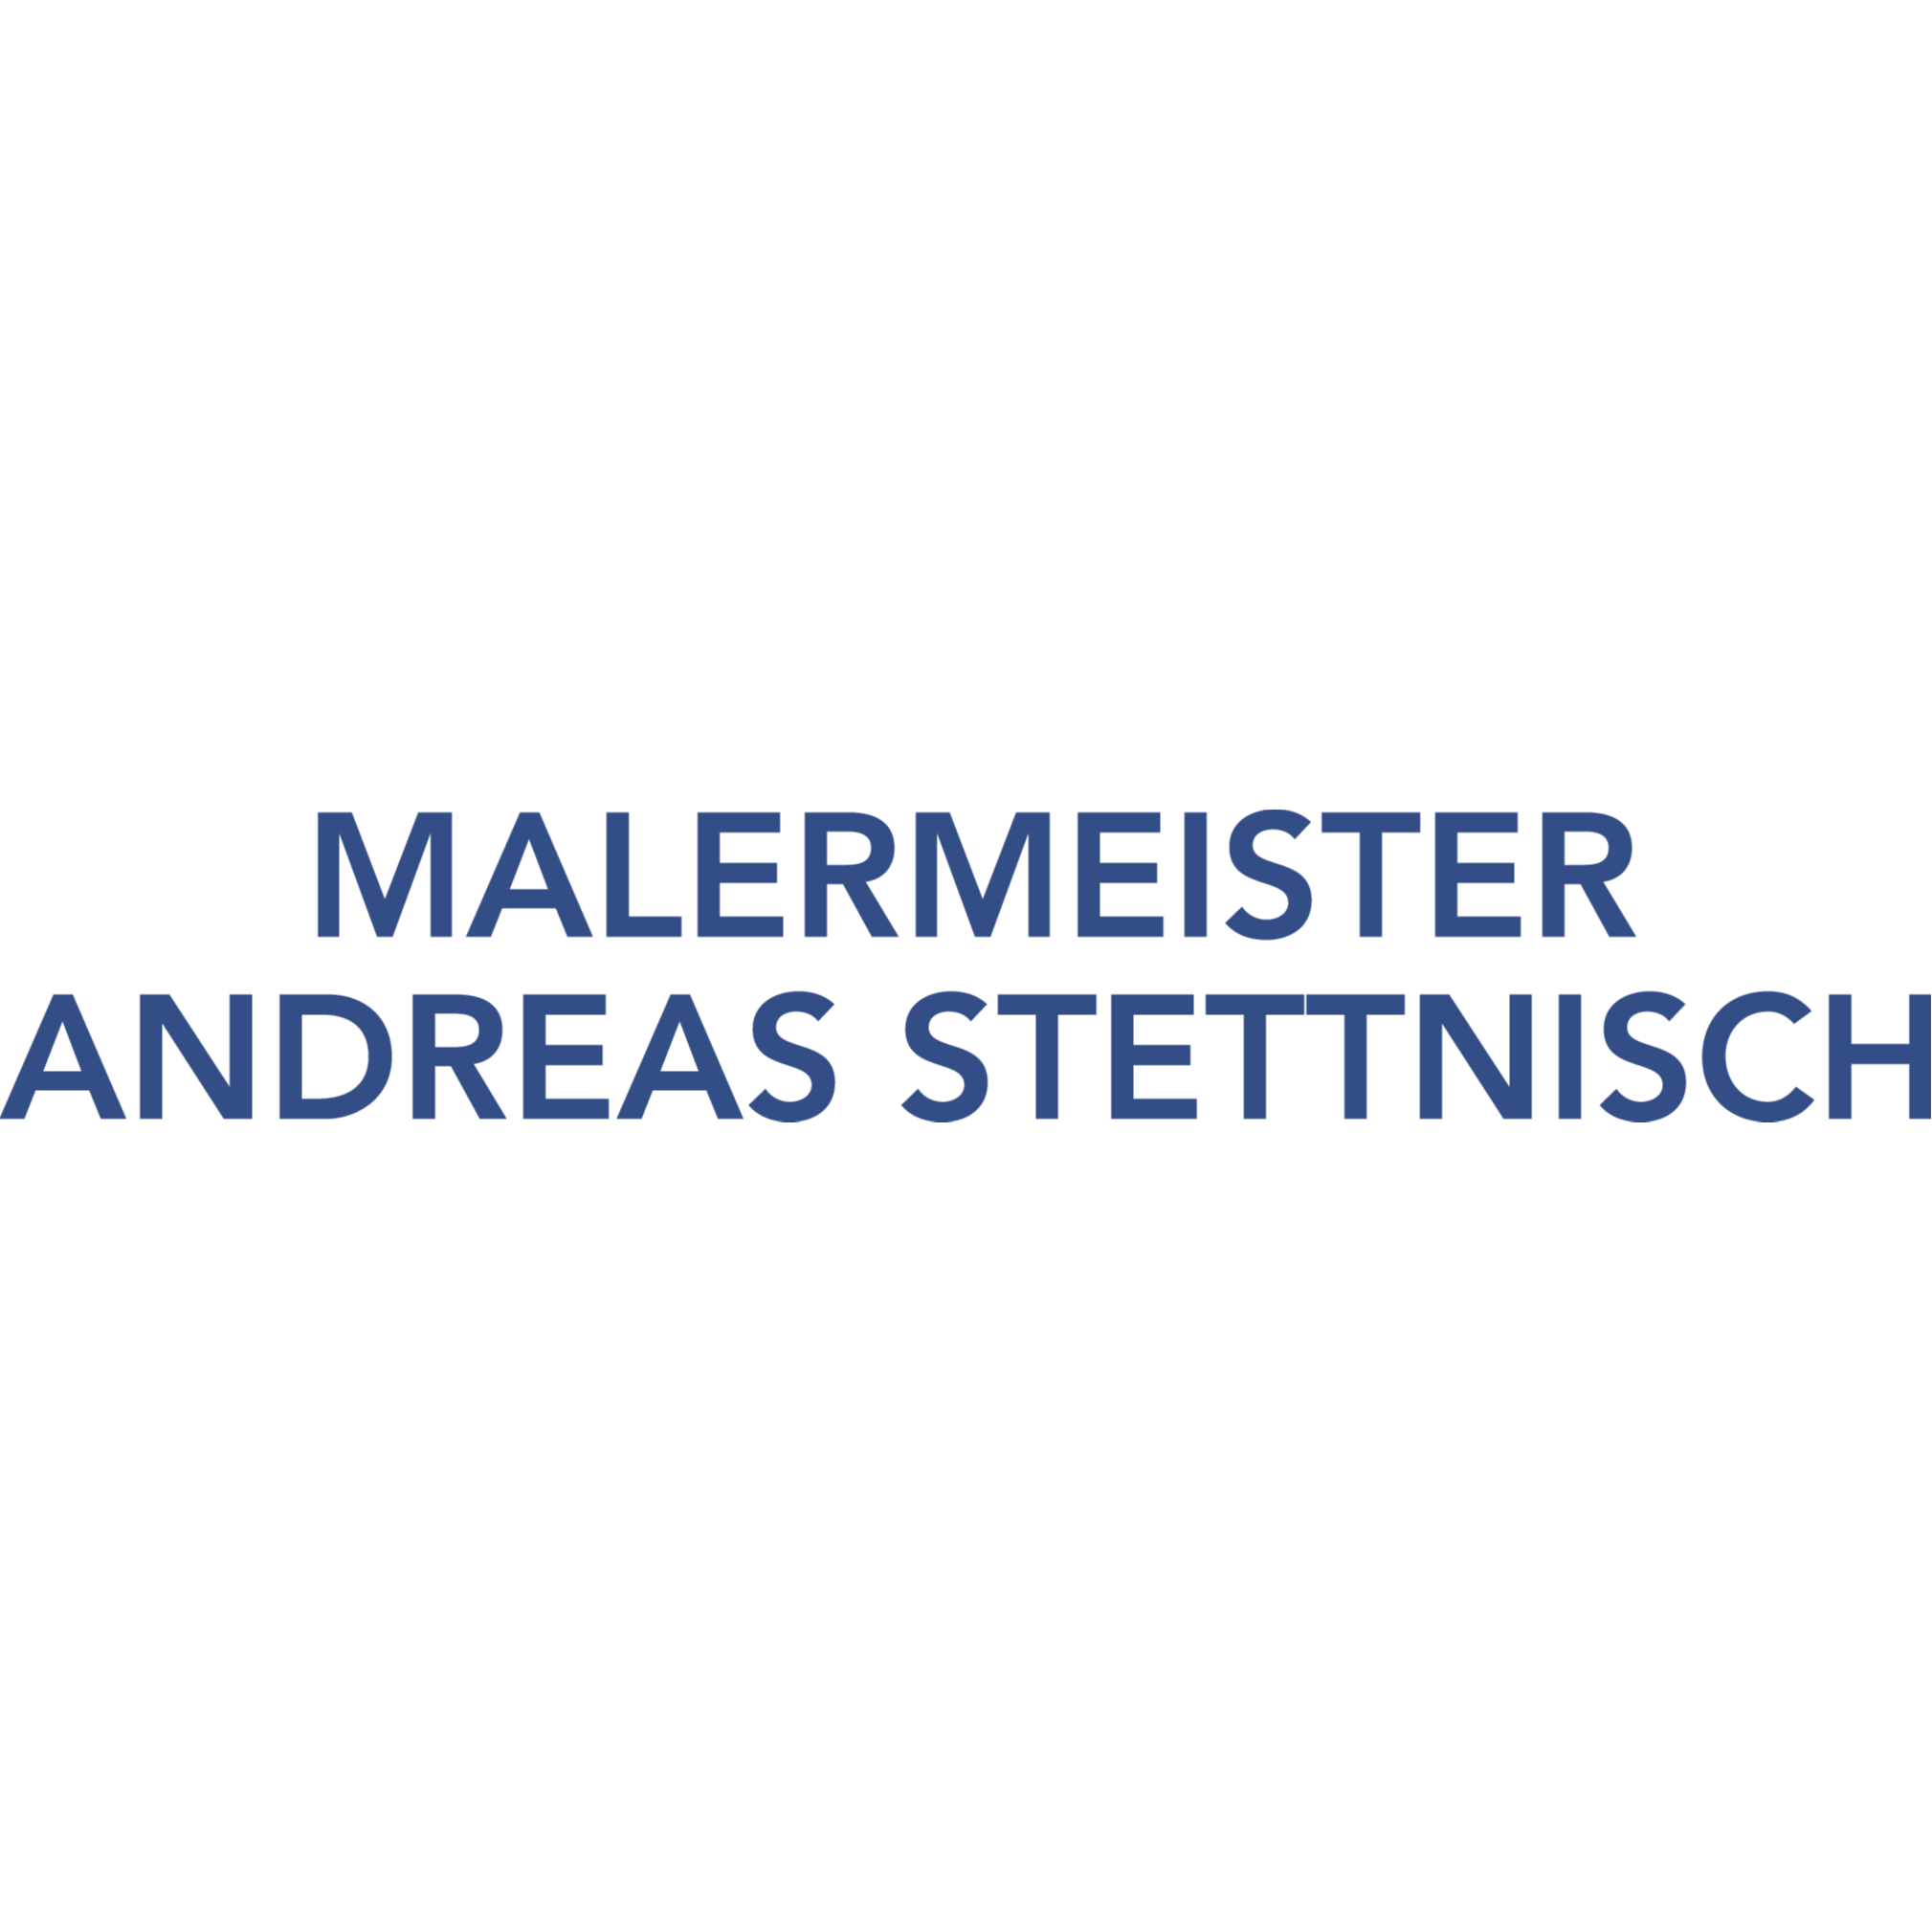 Malermeister Andreas Stettnisch in Freital - Logo